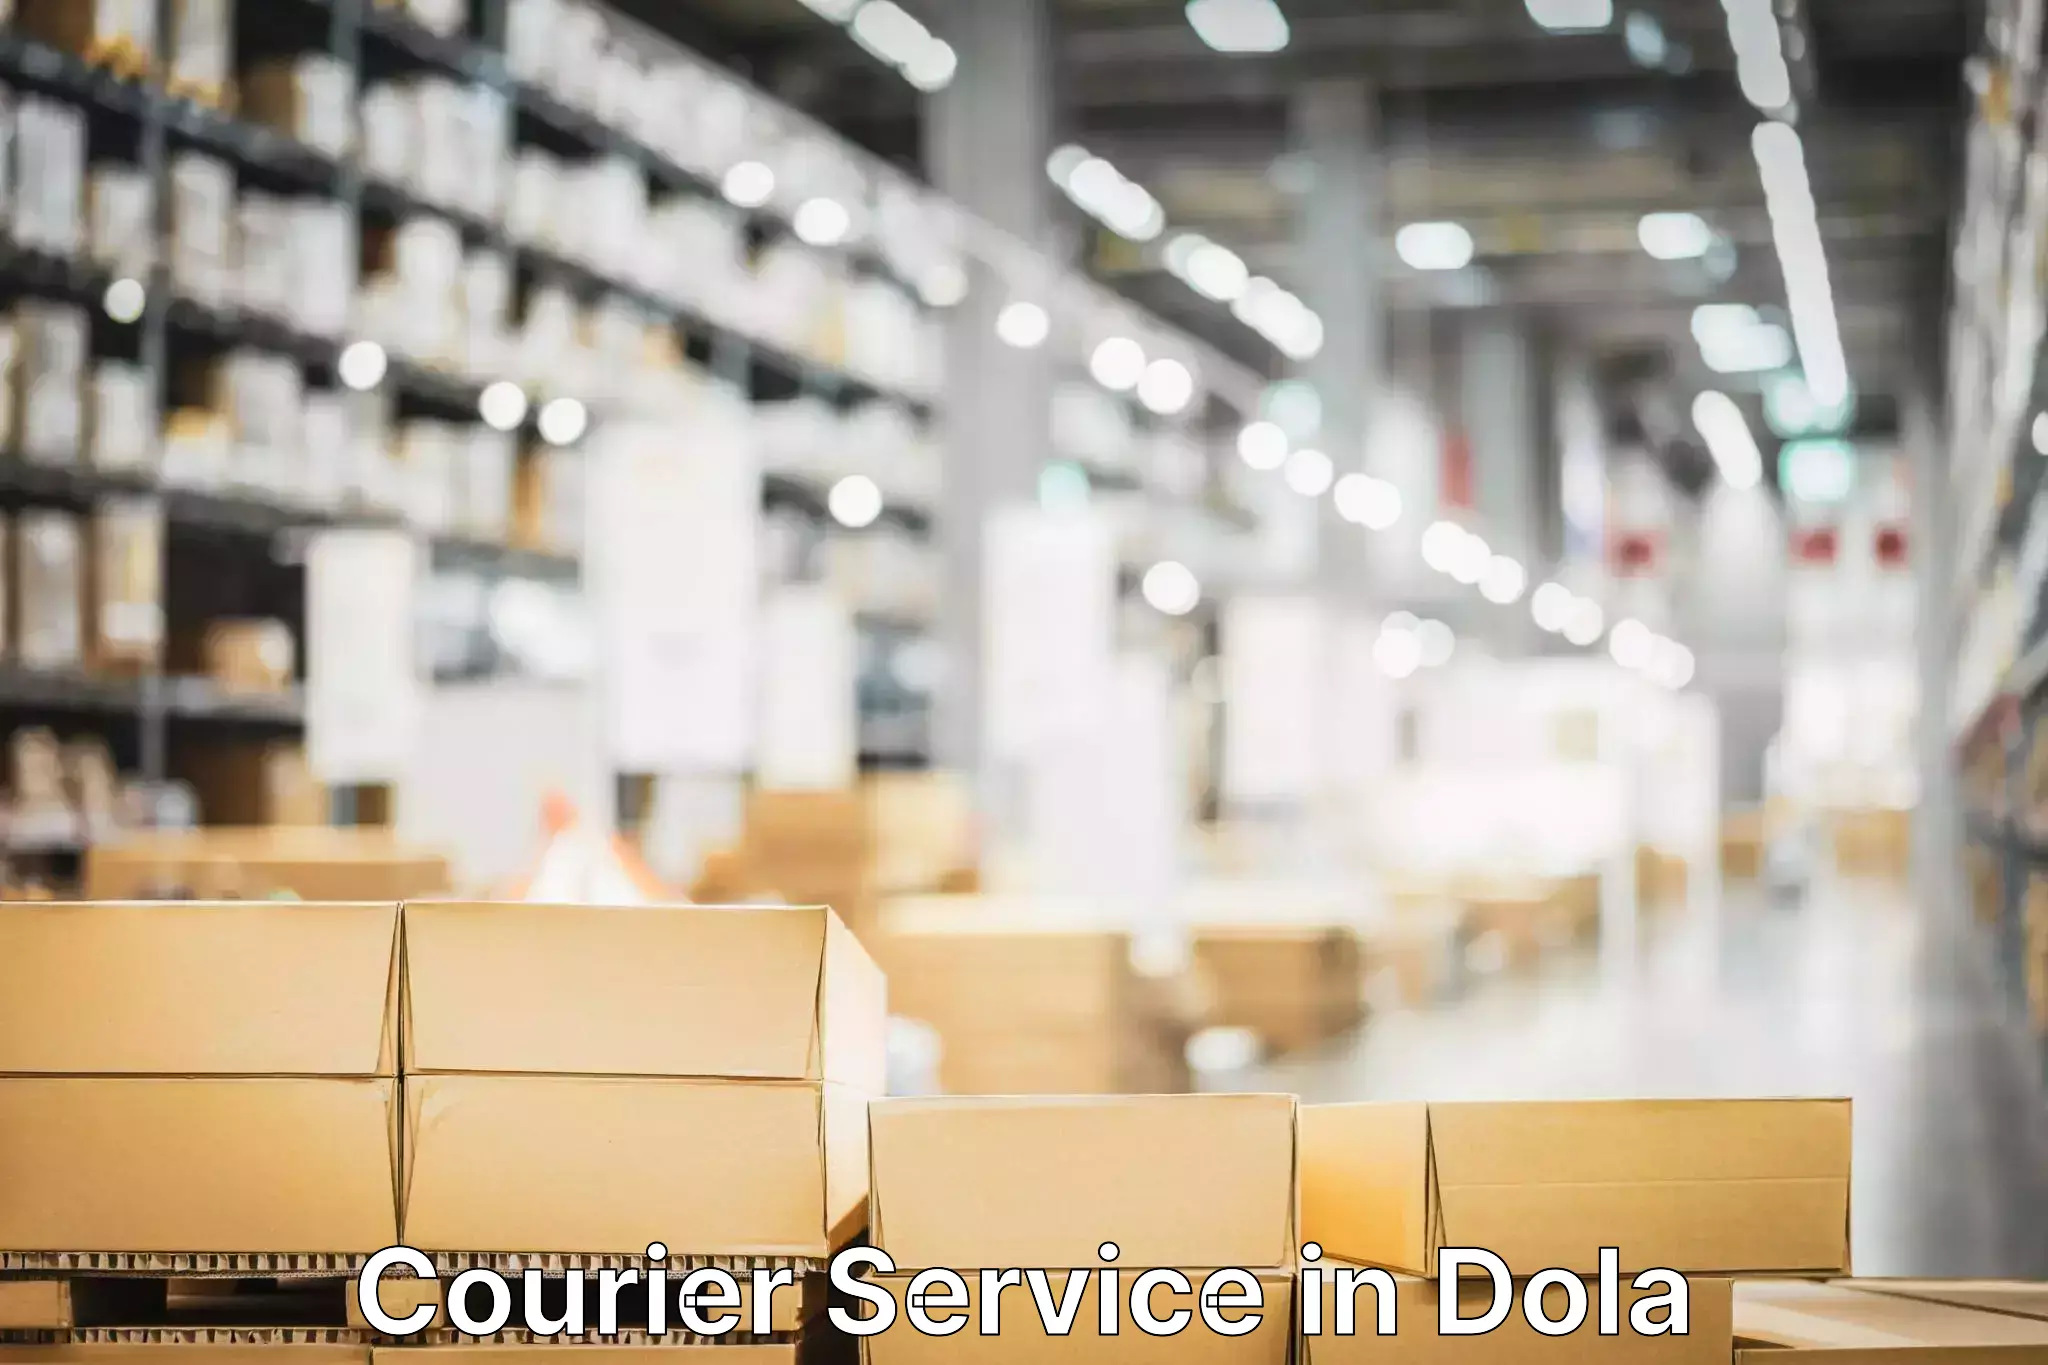 Efficient parcel service in Dola